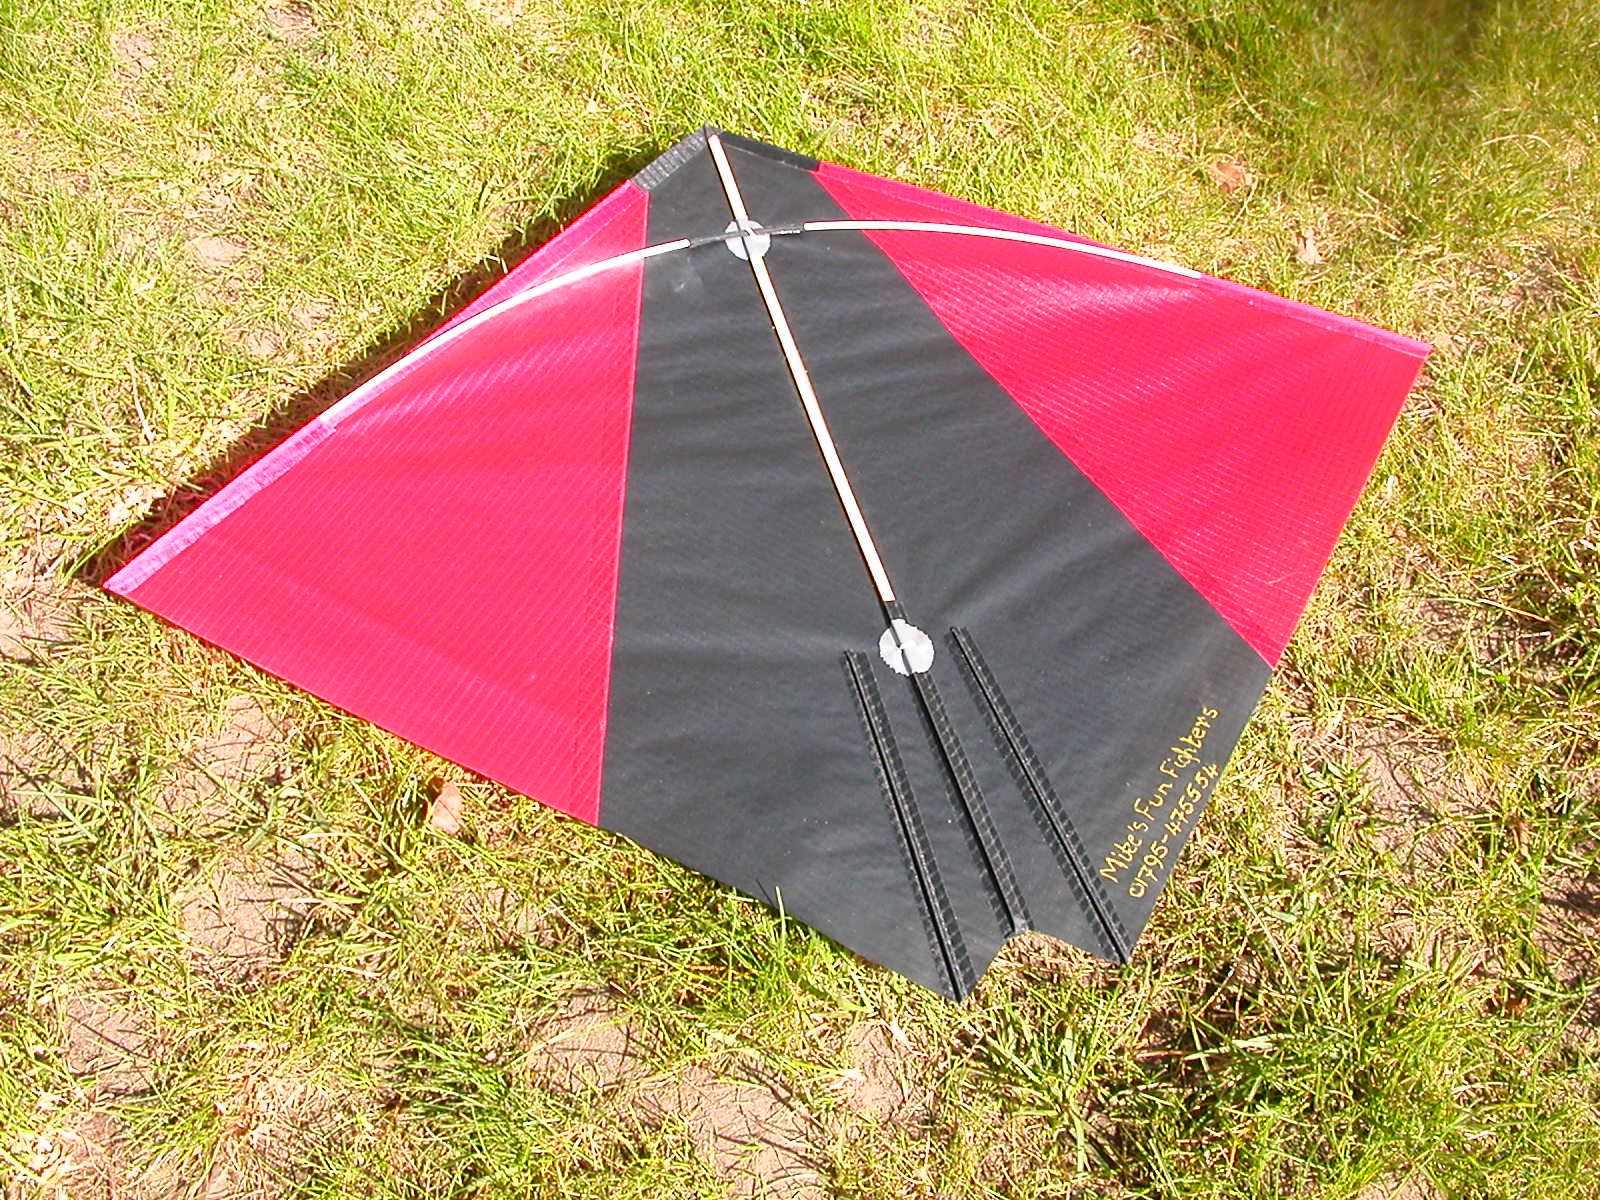 Mike Robinson's kites